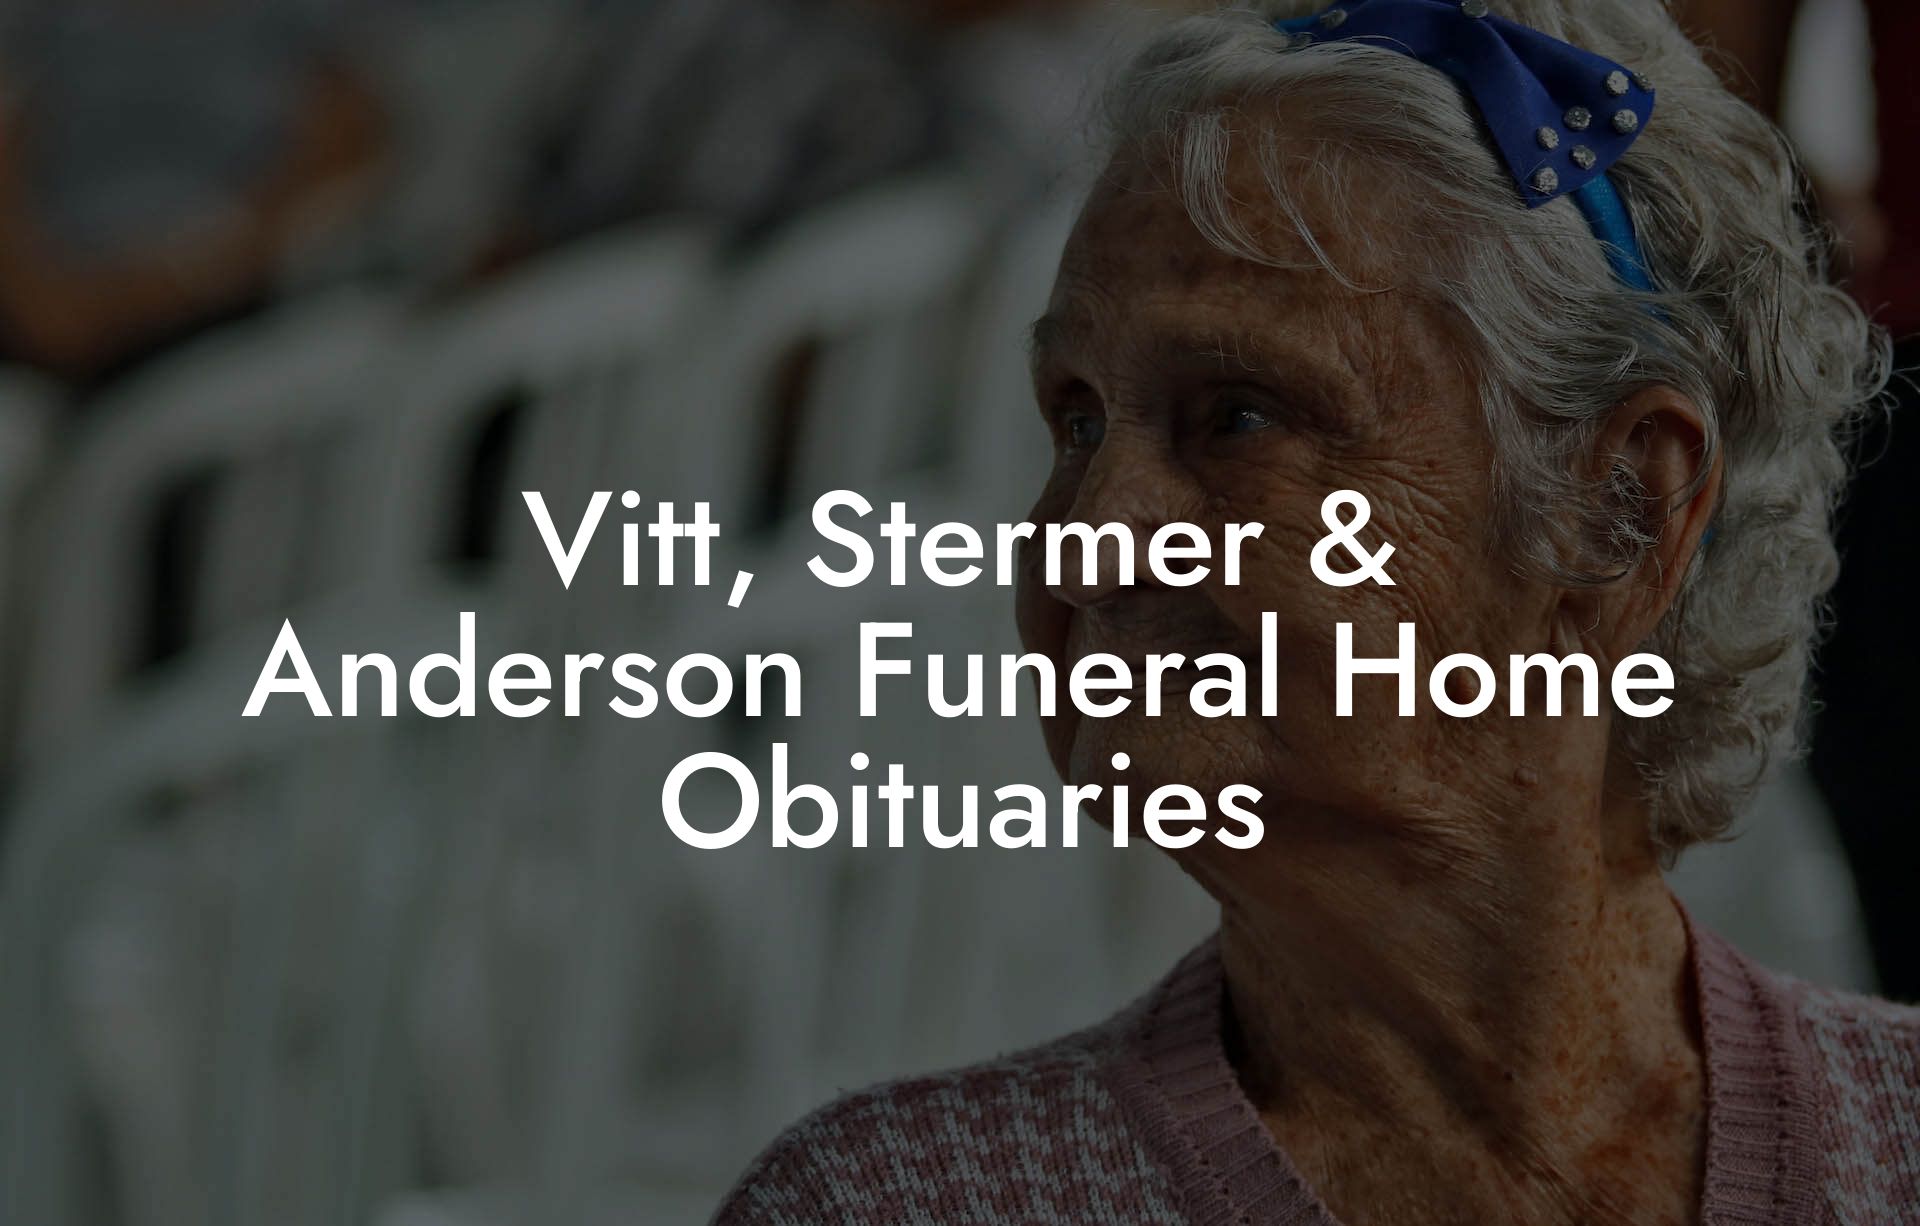 Vitt, Stermer & Anderson Funeral Home Obituaries